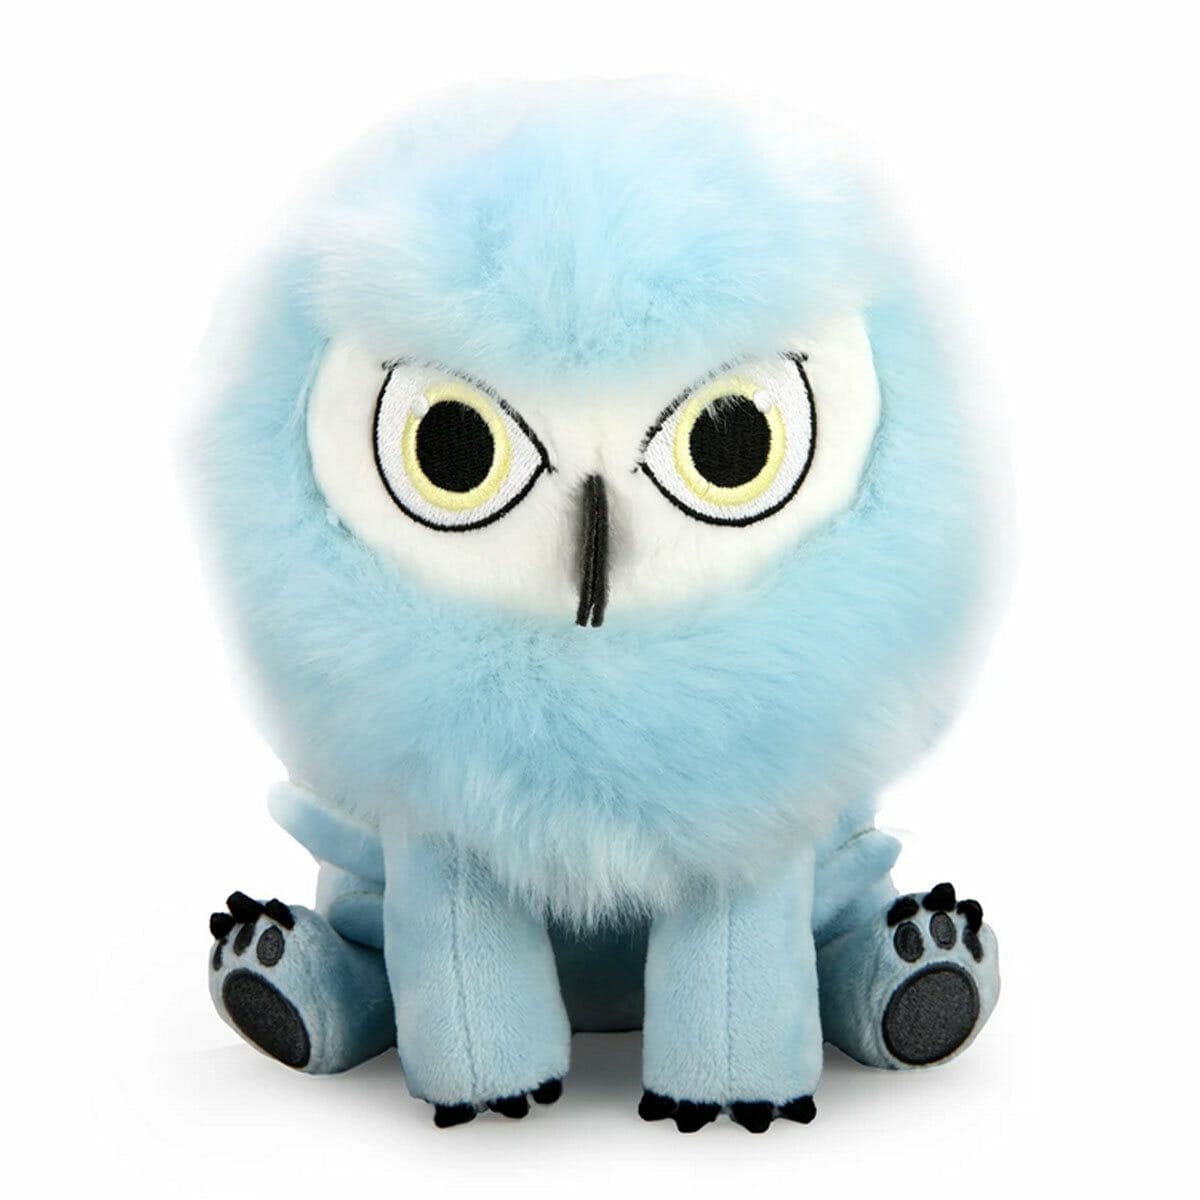 Cute D&D plush Owlbear